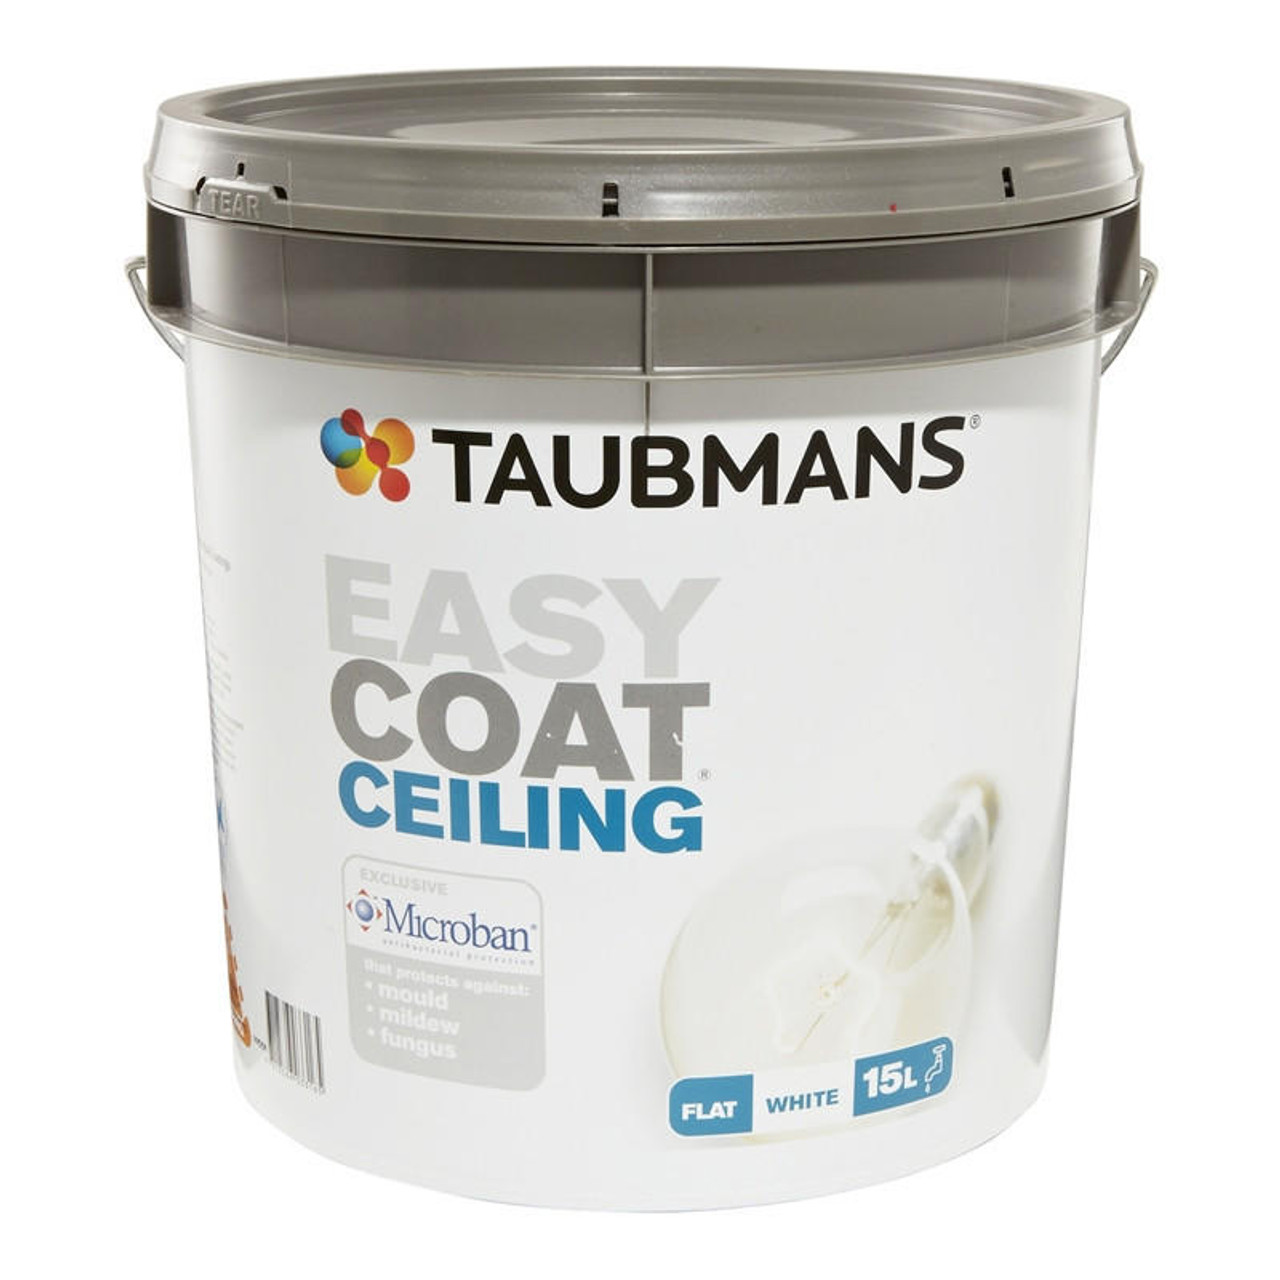 Taubmans Easy Coat 15L White Ceiling Paint